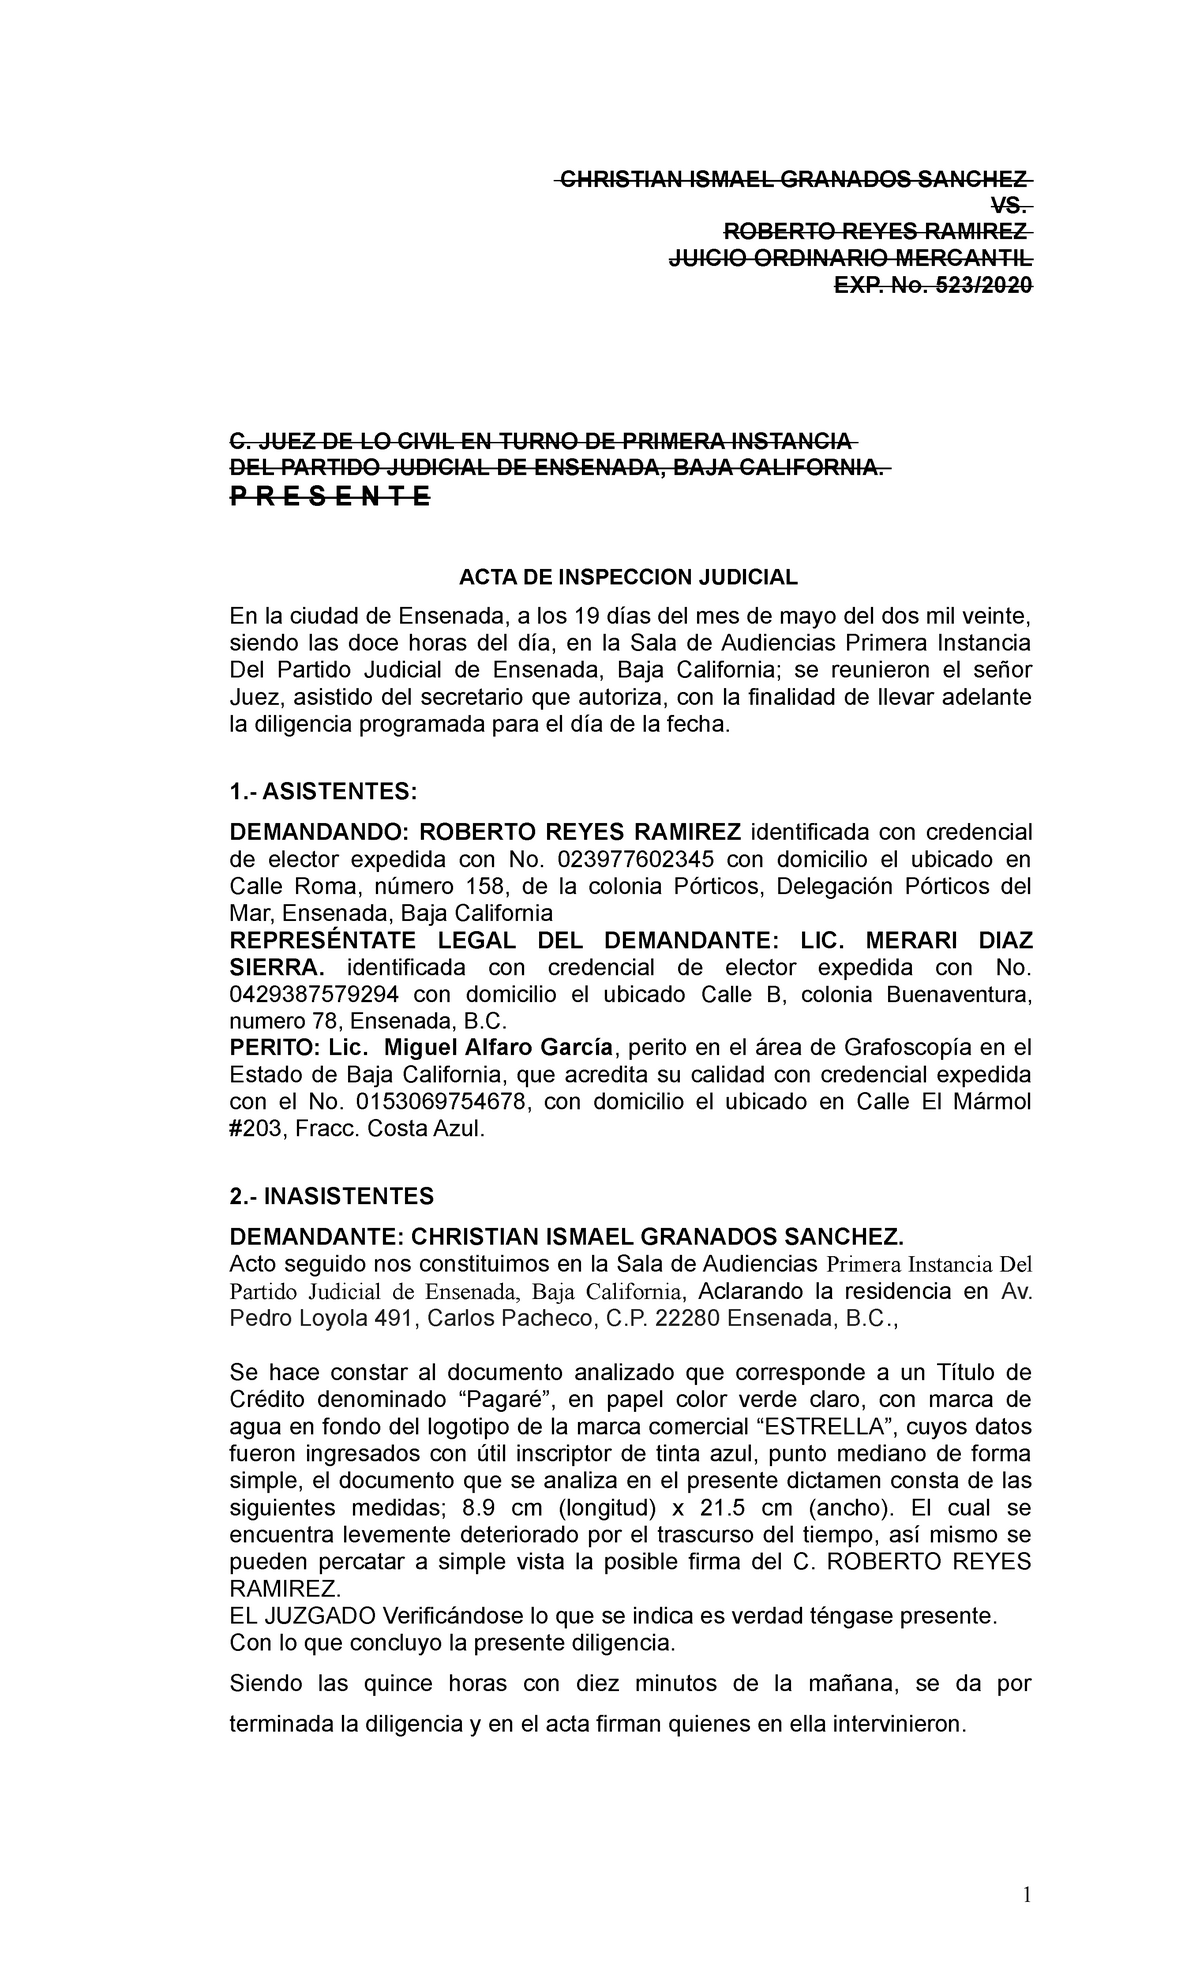 Acta de Inspeccion Judicial Merari corregido - CHRISTIAN ISMAEL GRANADOS  SANCHEZ VS. ROBERTO REYES - Studocu